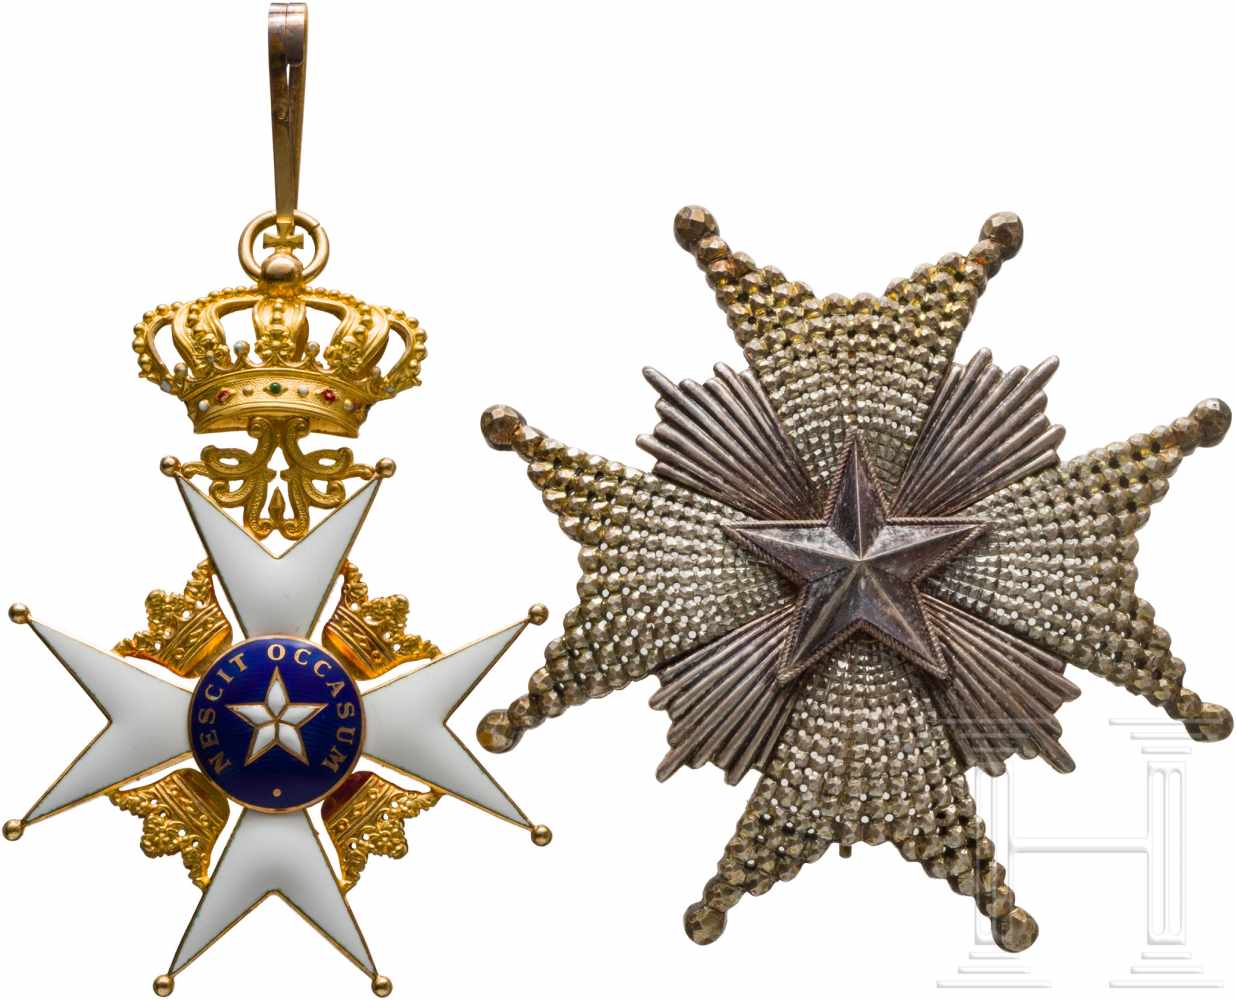 Königlicher Nordstern-Orden (Kungliga Nordstjärneorden) - Großkreuzsatz in Carlman-FertigungIn - Image 3 of 3